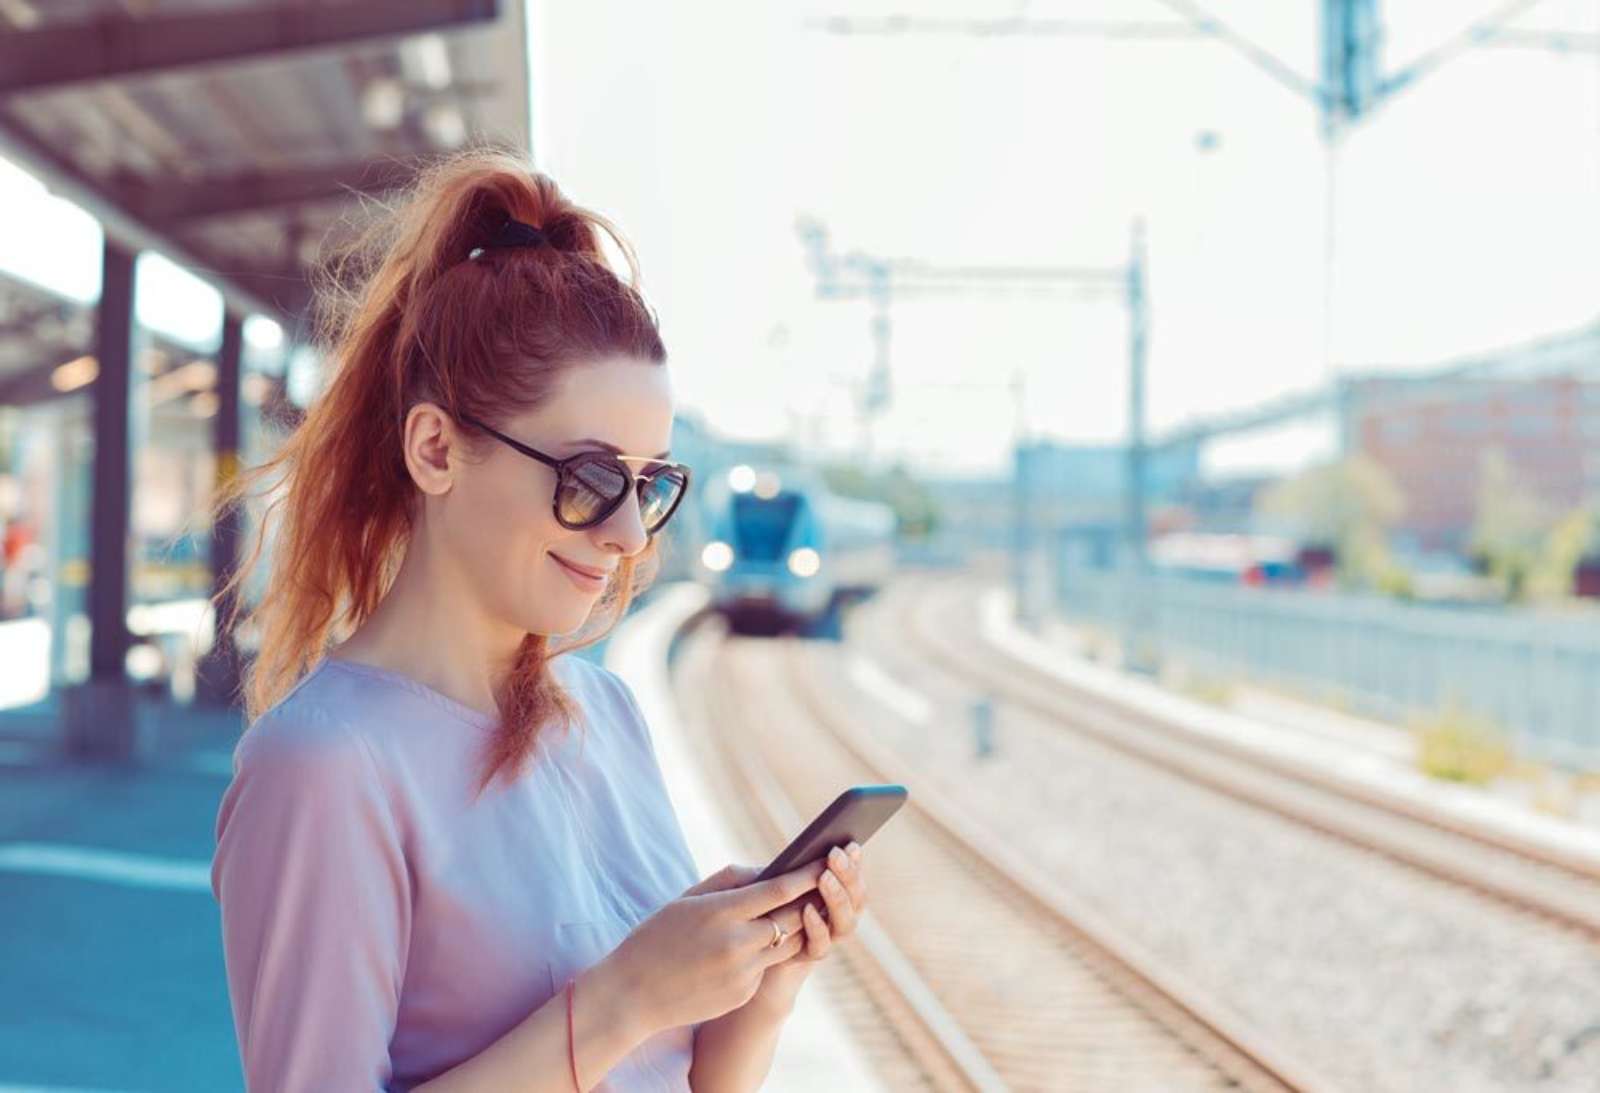 Train station platform woman smartphone